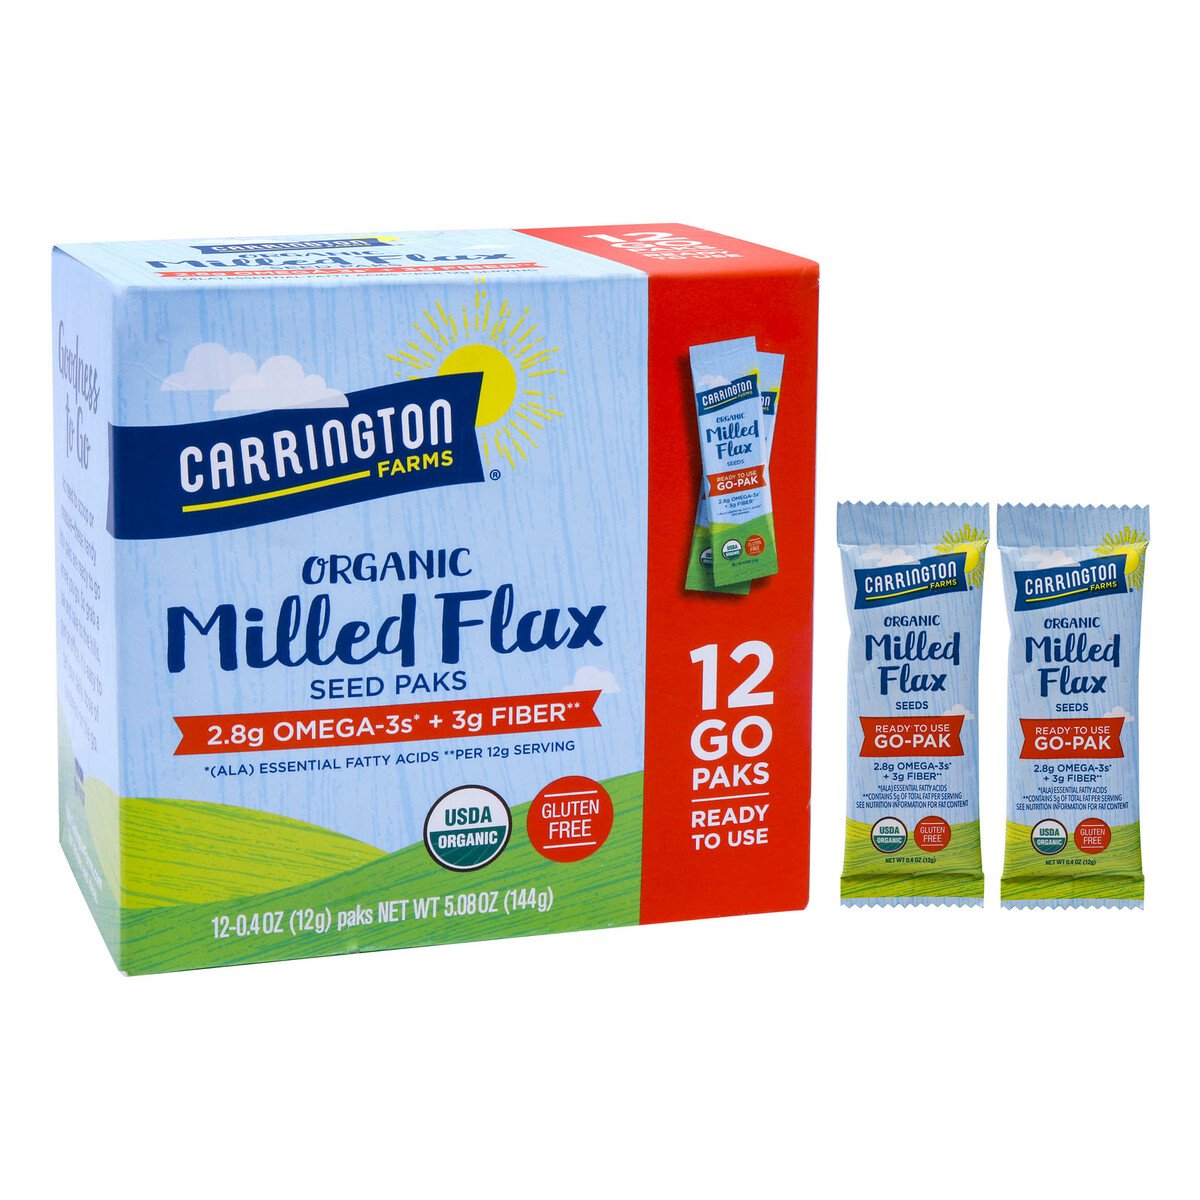 Carrington Farms Organic Milled Flax Packs 12 x 12 g